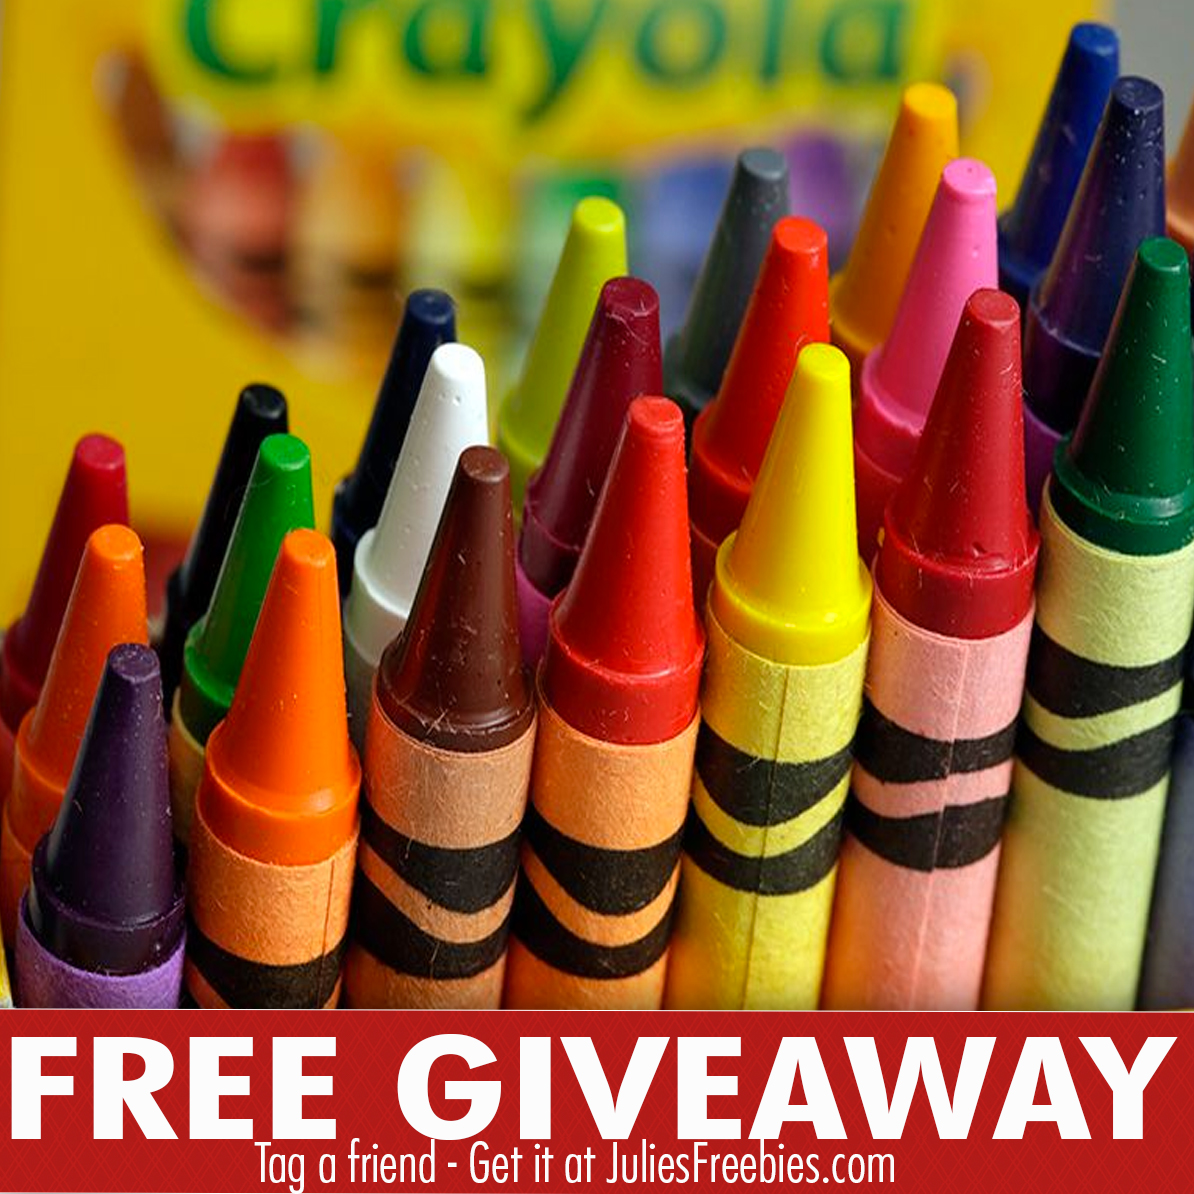 Crayola "Thank a Teacher" Sweepstakes - Julie's Freebies